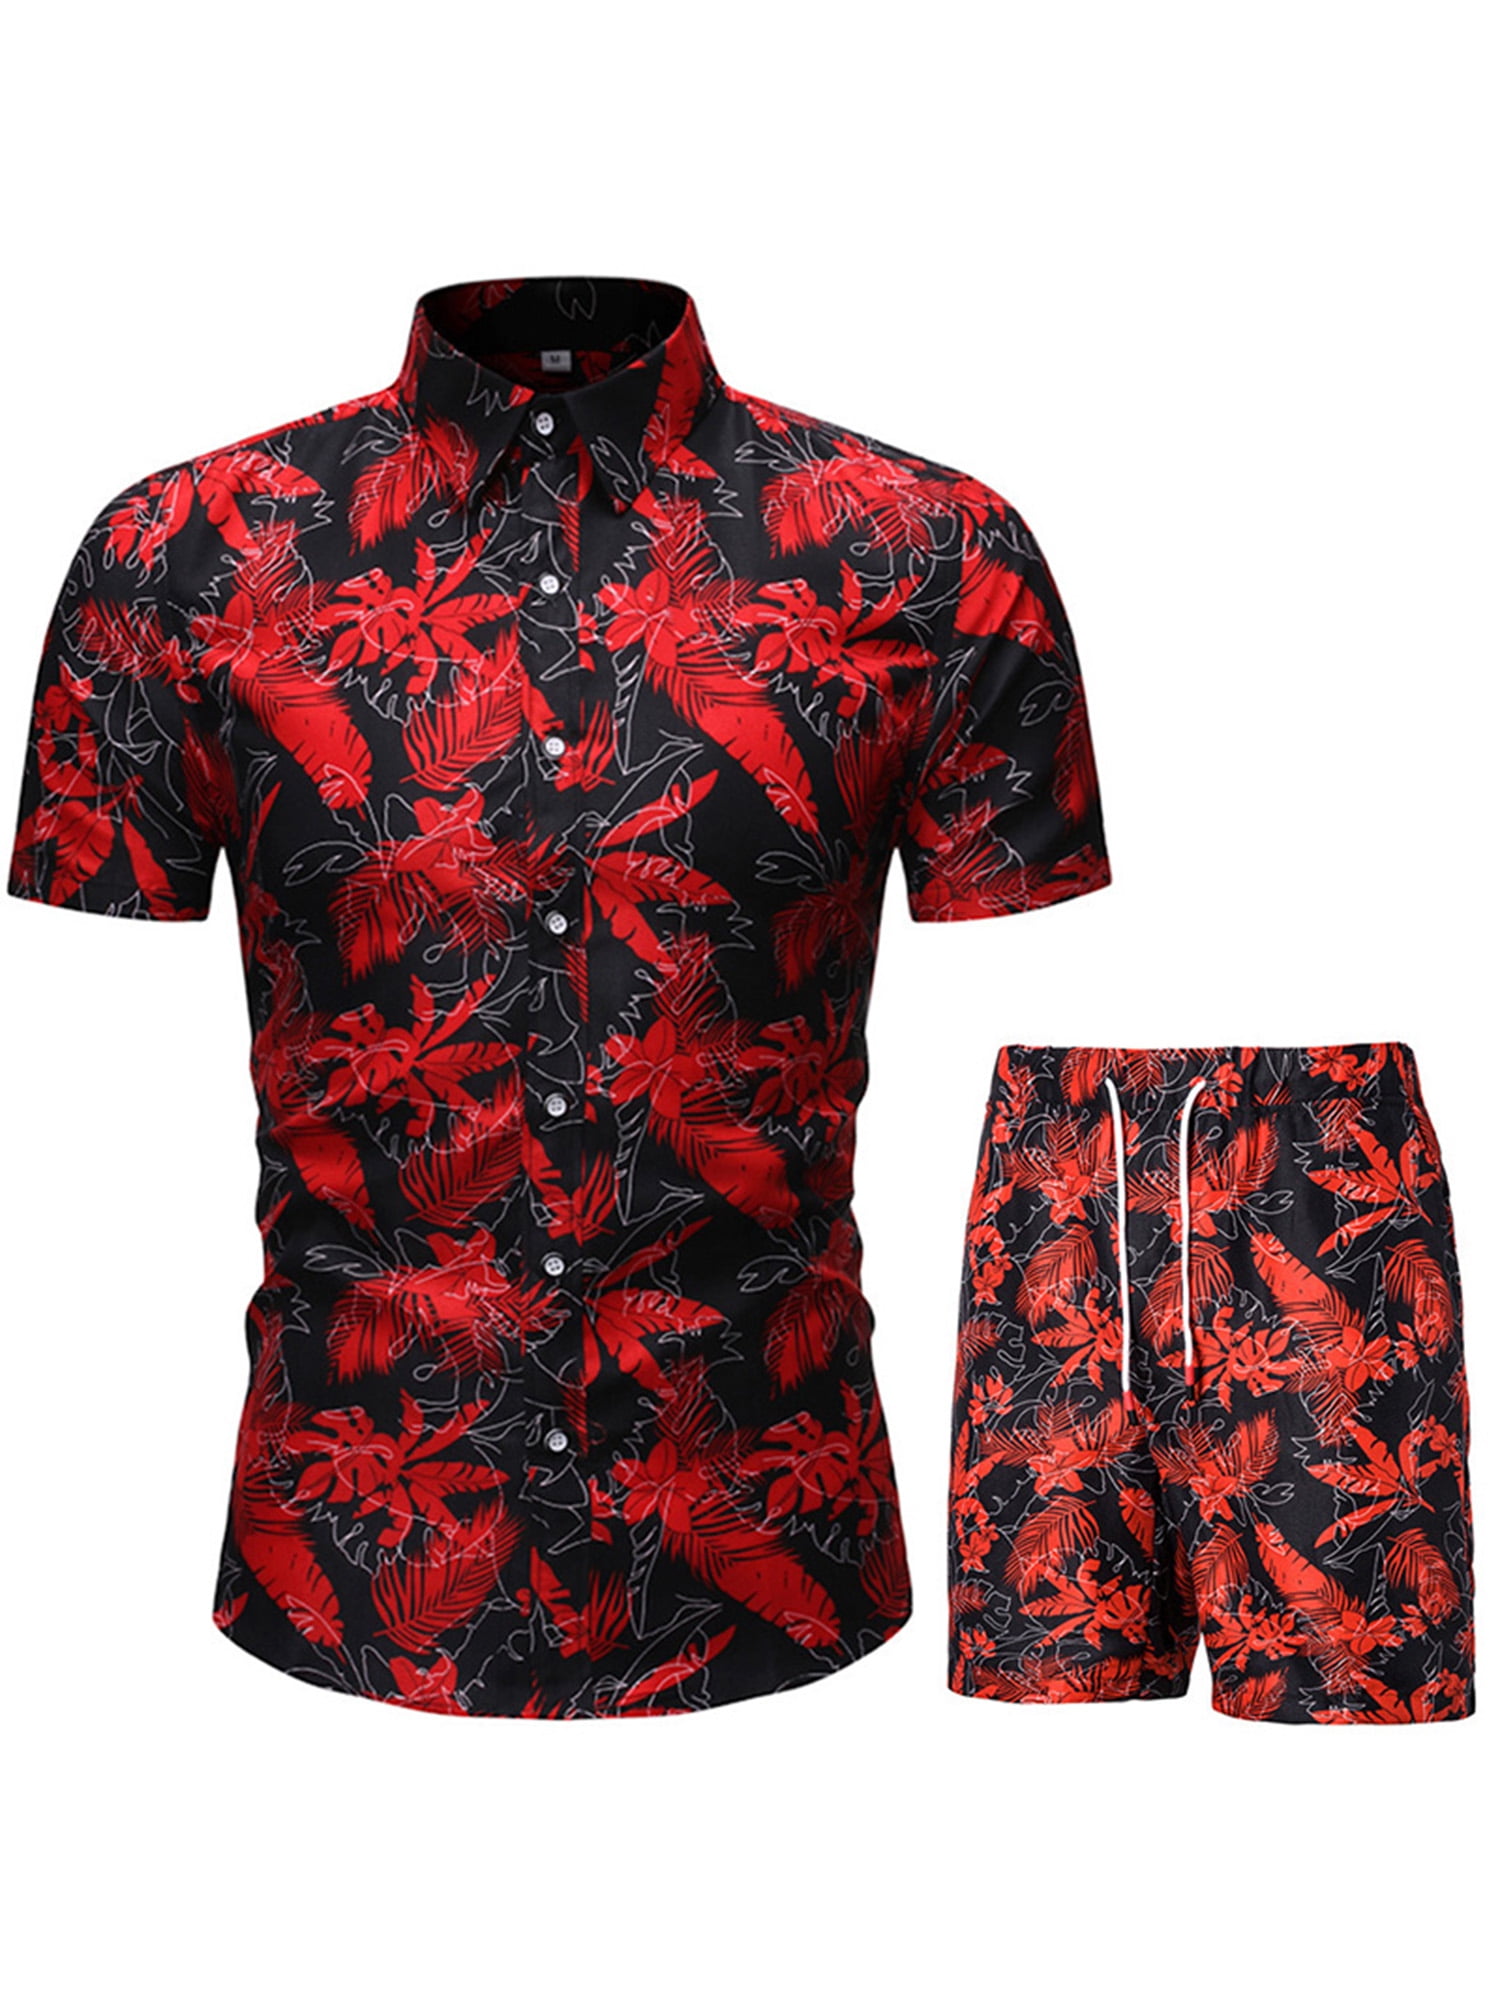 Daupanzees Men's Hawaiian Flower Shirts Aloha Printed Short Sleeve Button Down Shirt